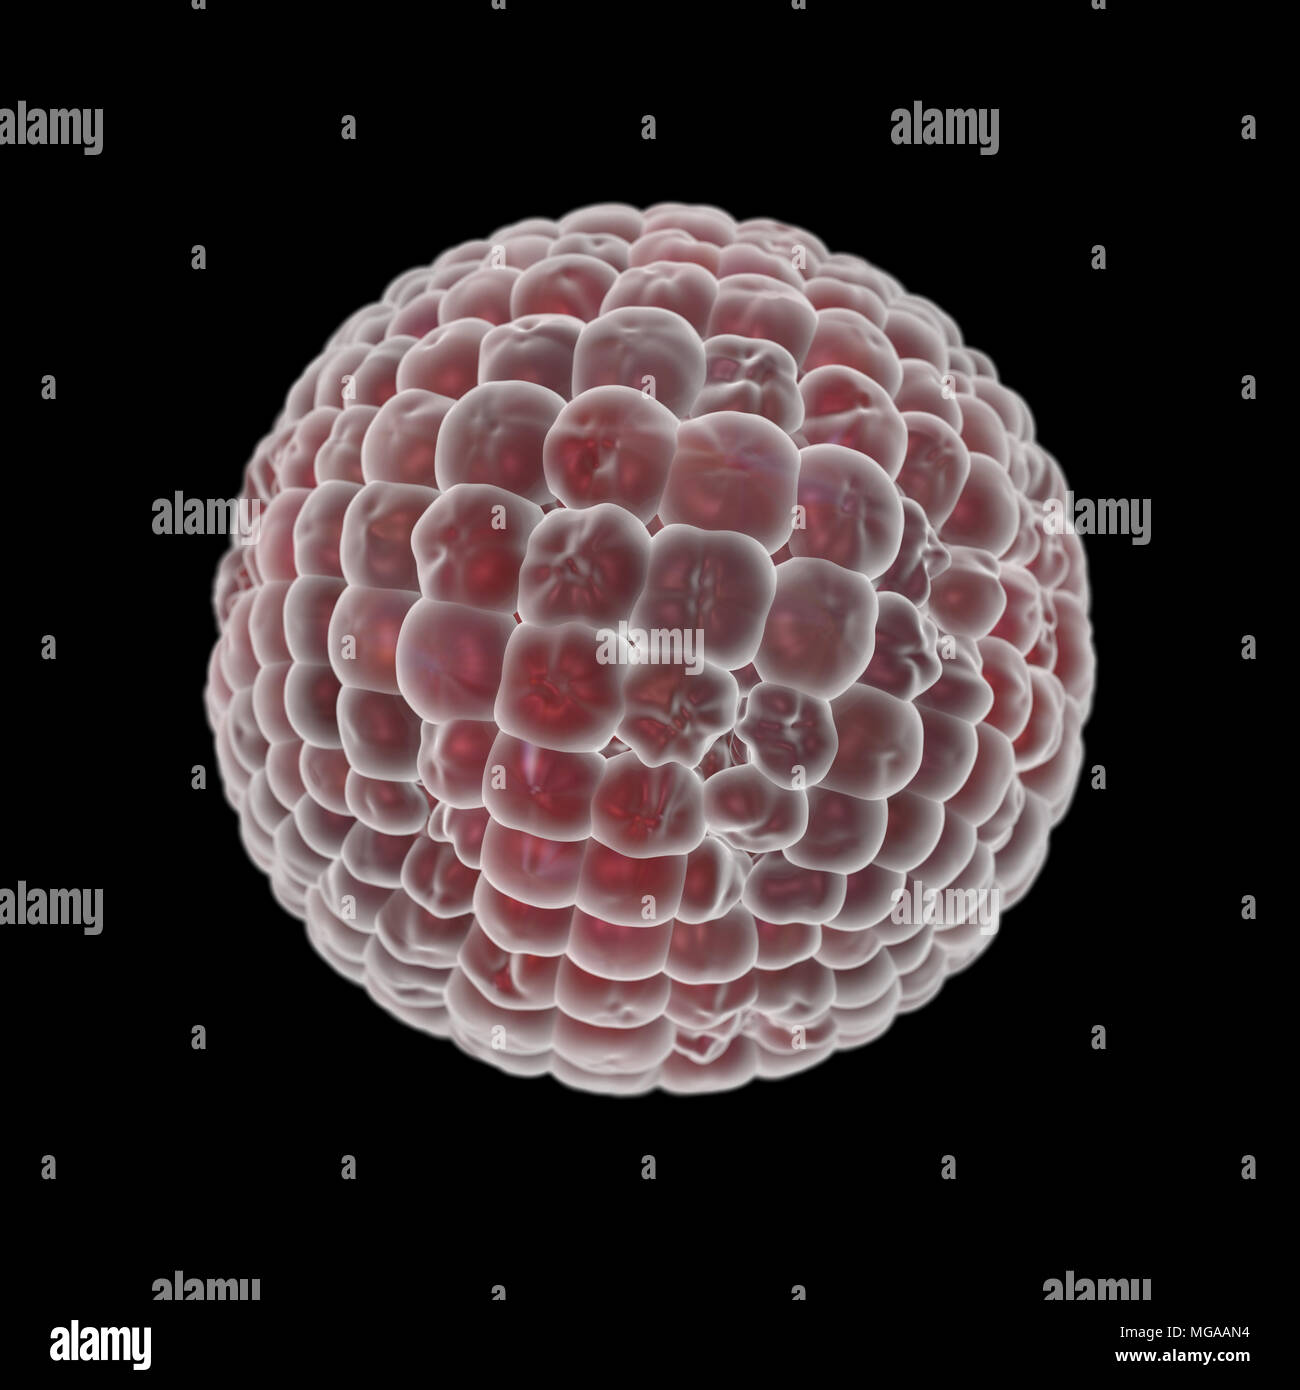 Round pink bacteria virus isolated on black background. 3D render medical illustration Stock Photo